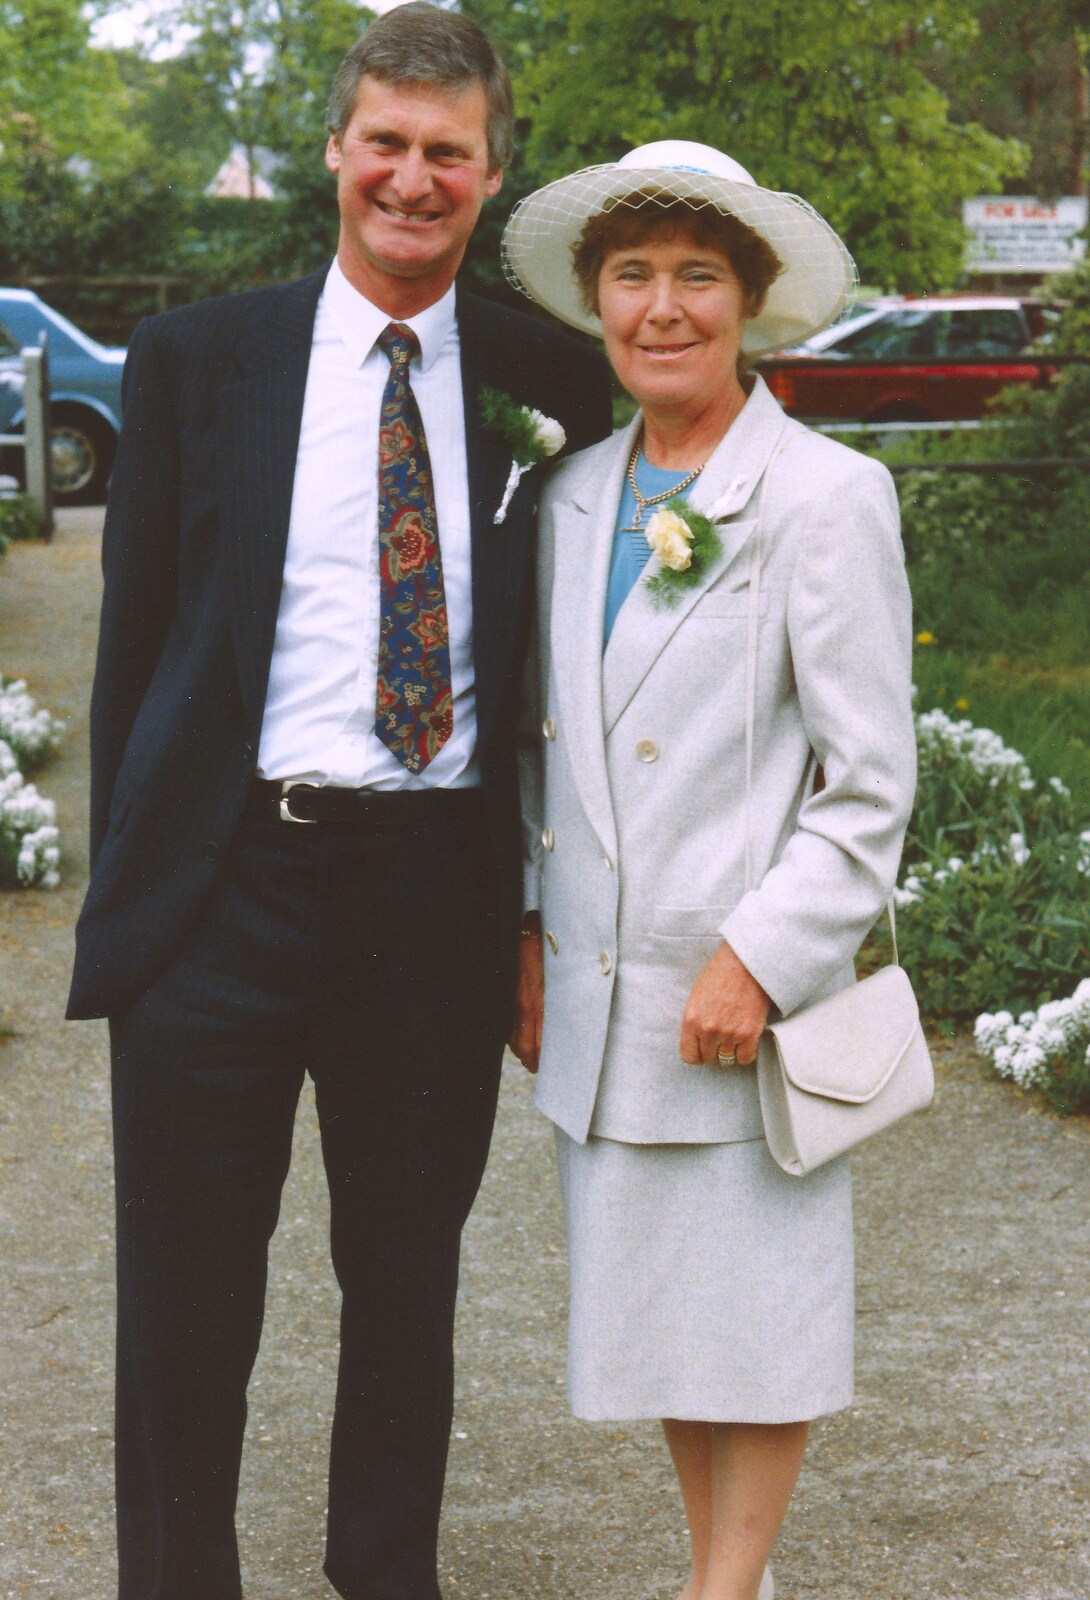 Geoff and Brenda from Debbie's Wedding, Suffolk - 12th June 1999